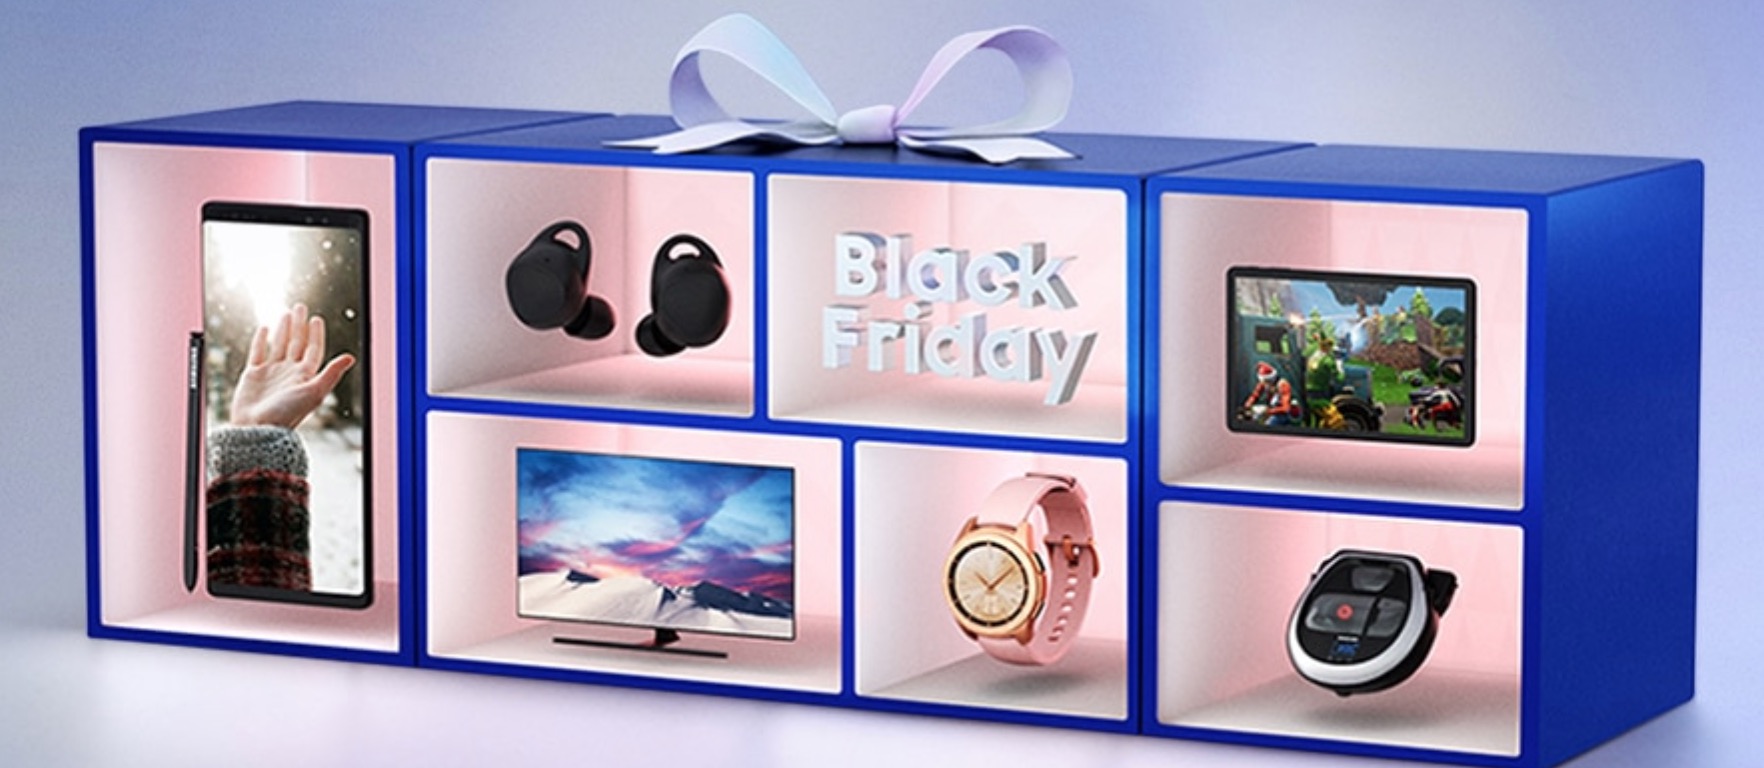 Samsung Black Friday deals; Up to $900 off TVs, $200 off Galaxy phones - When Will Samsung Black Friday Deals End